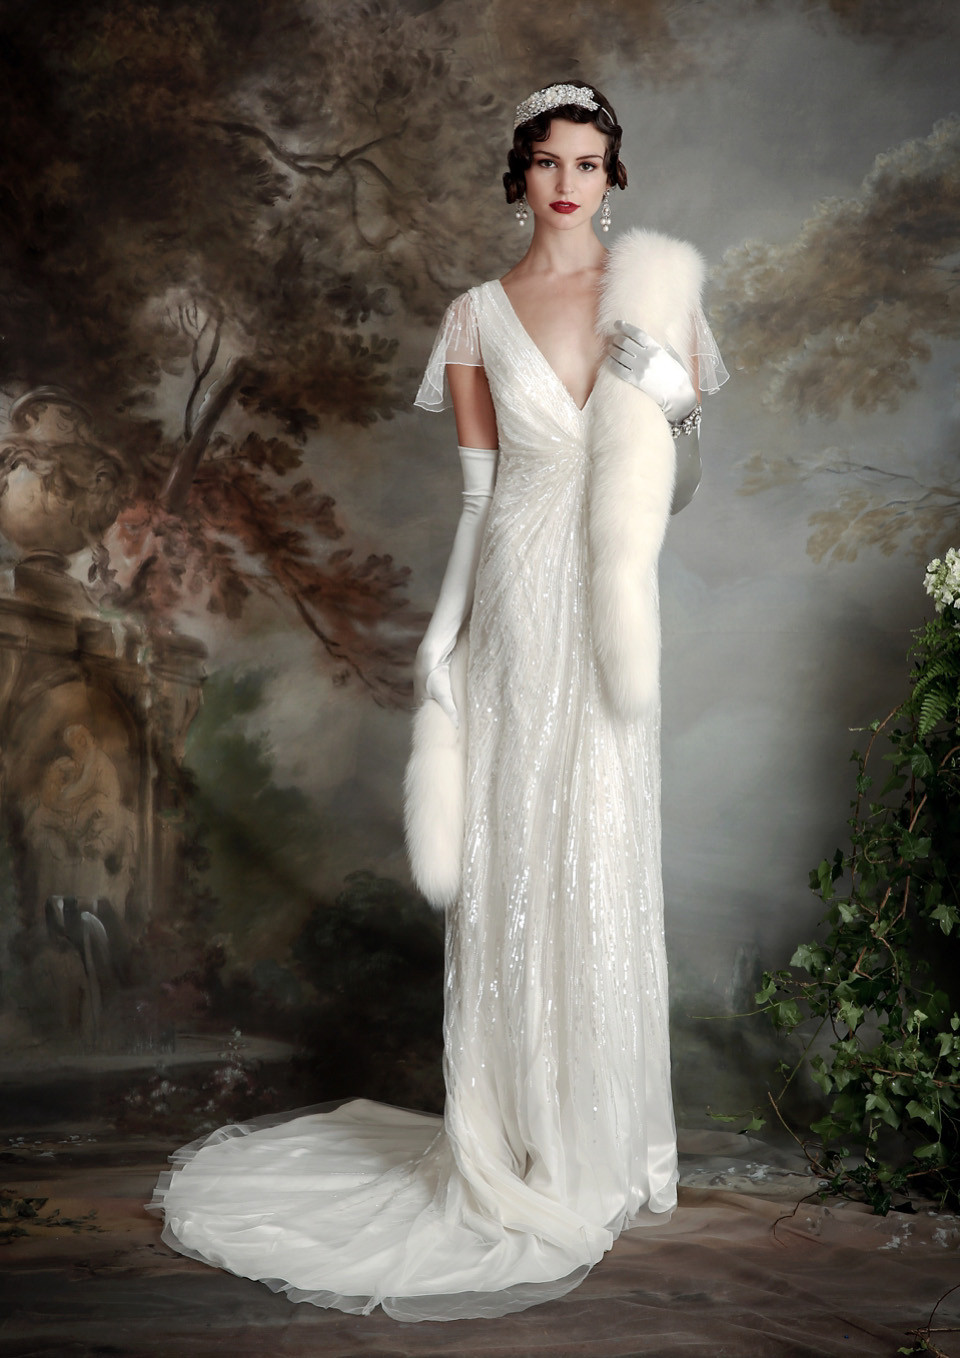 Art Deco Wedding Gowns
 Eliza Jane Howell Elegant Art Deco Inspired Wedding